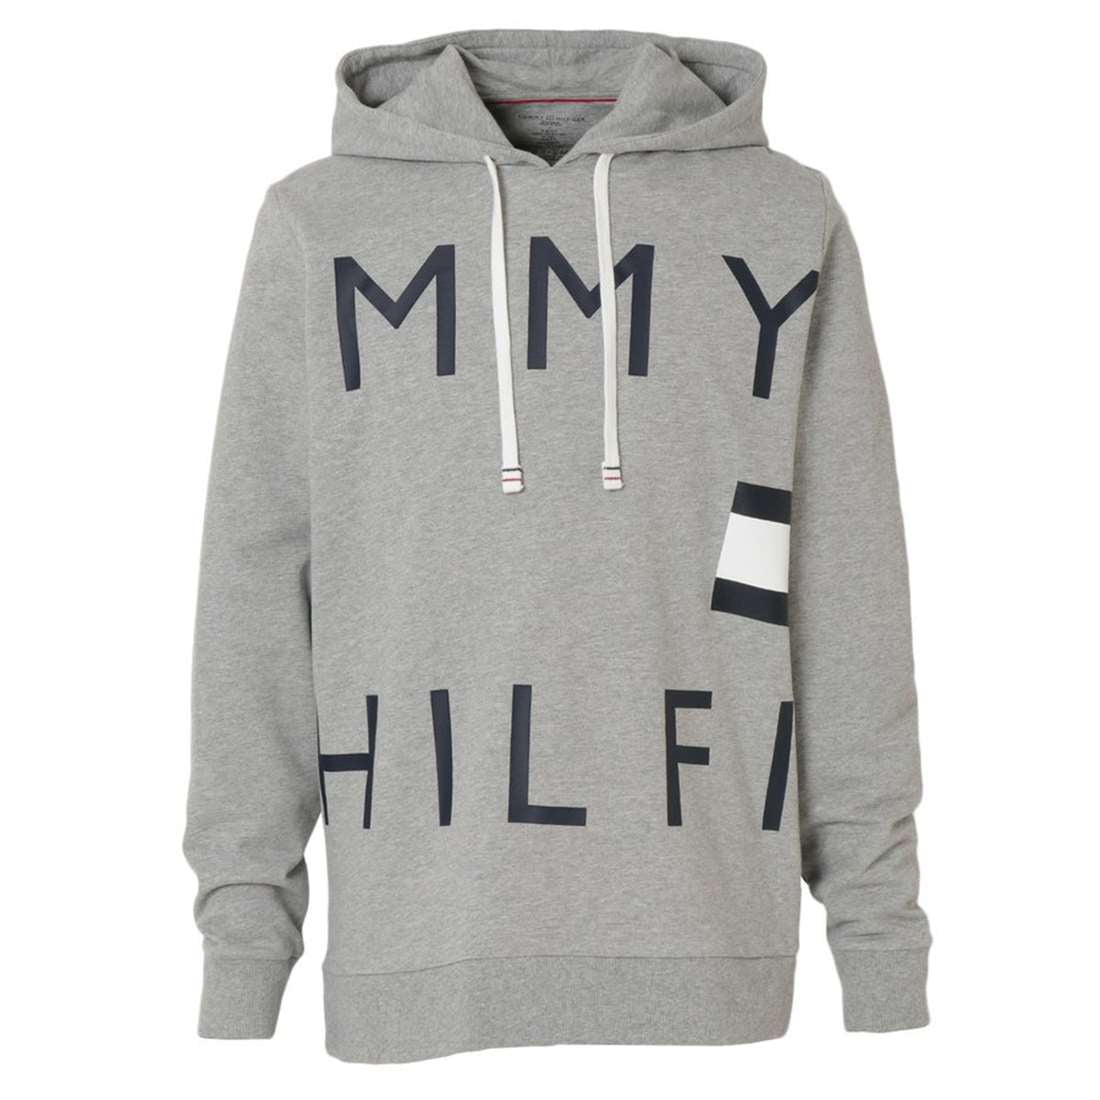 Tommy Hilfiger Men's Pullover Logo Hoodie, Grey Heather,L - US